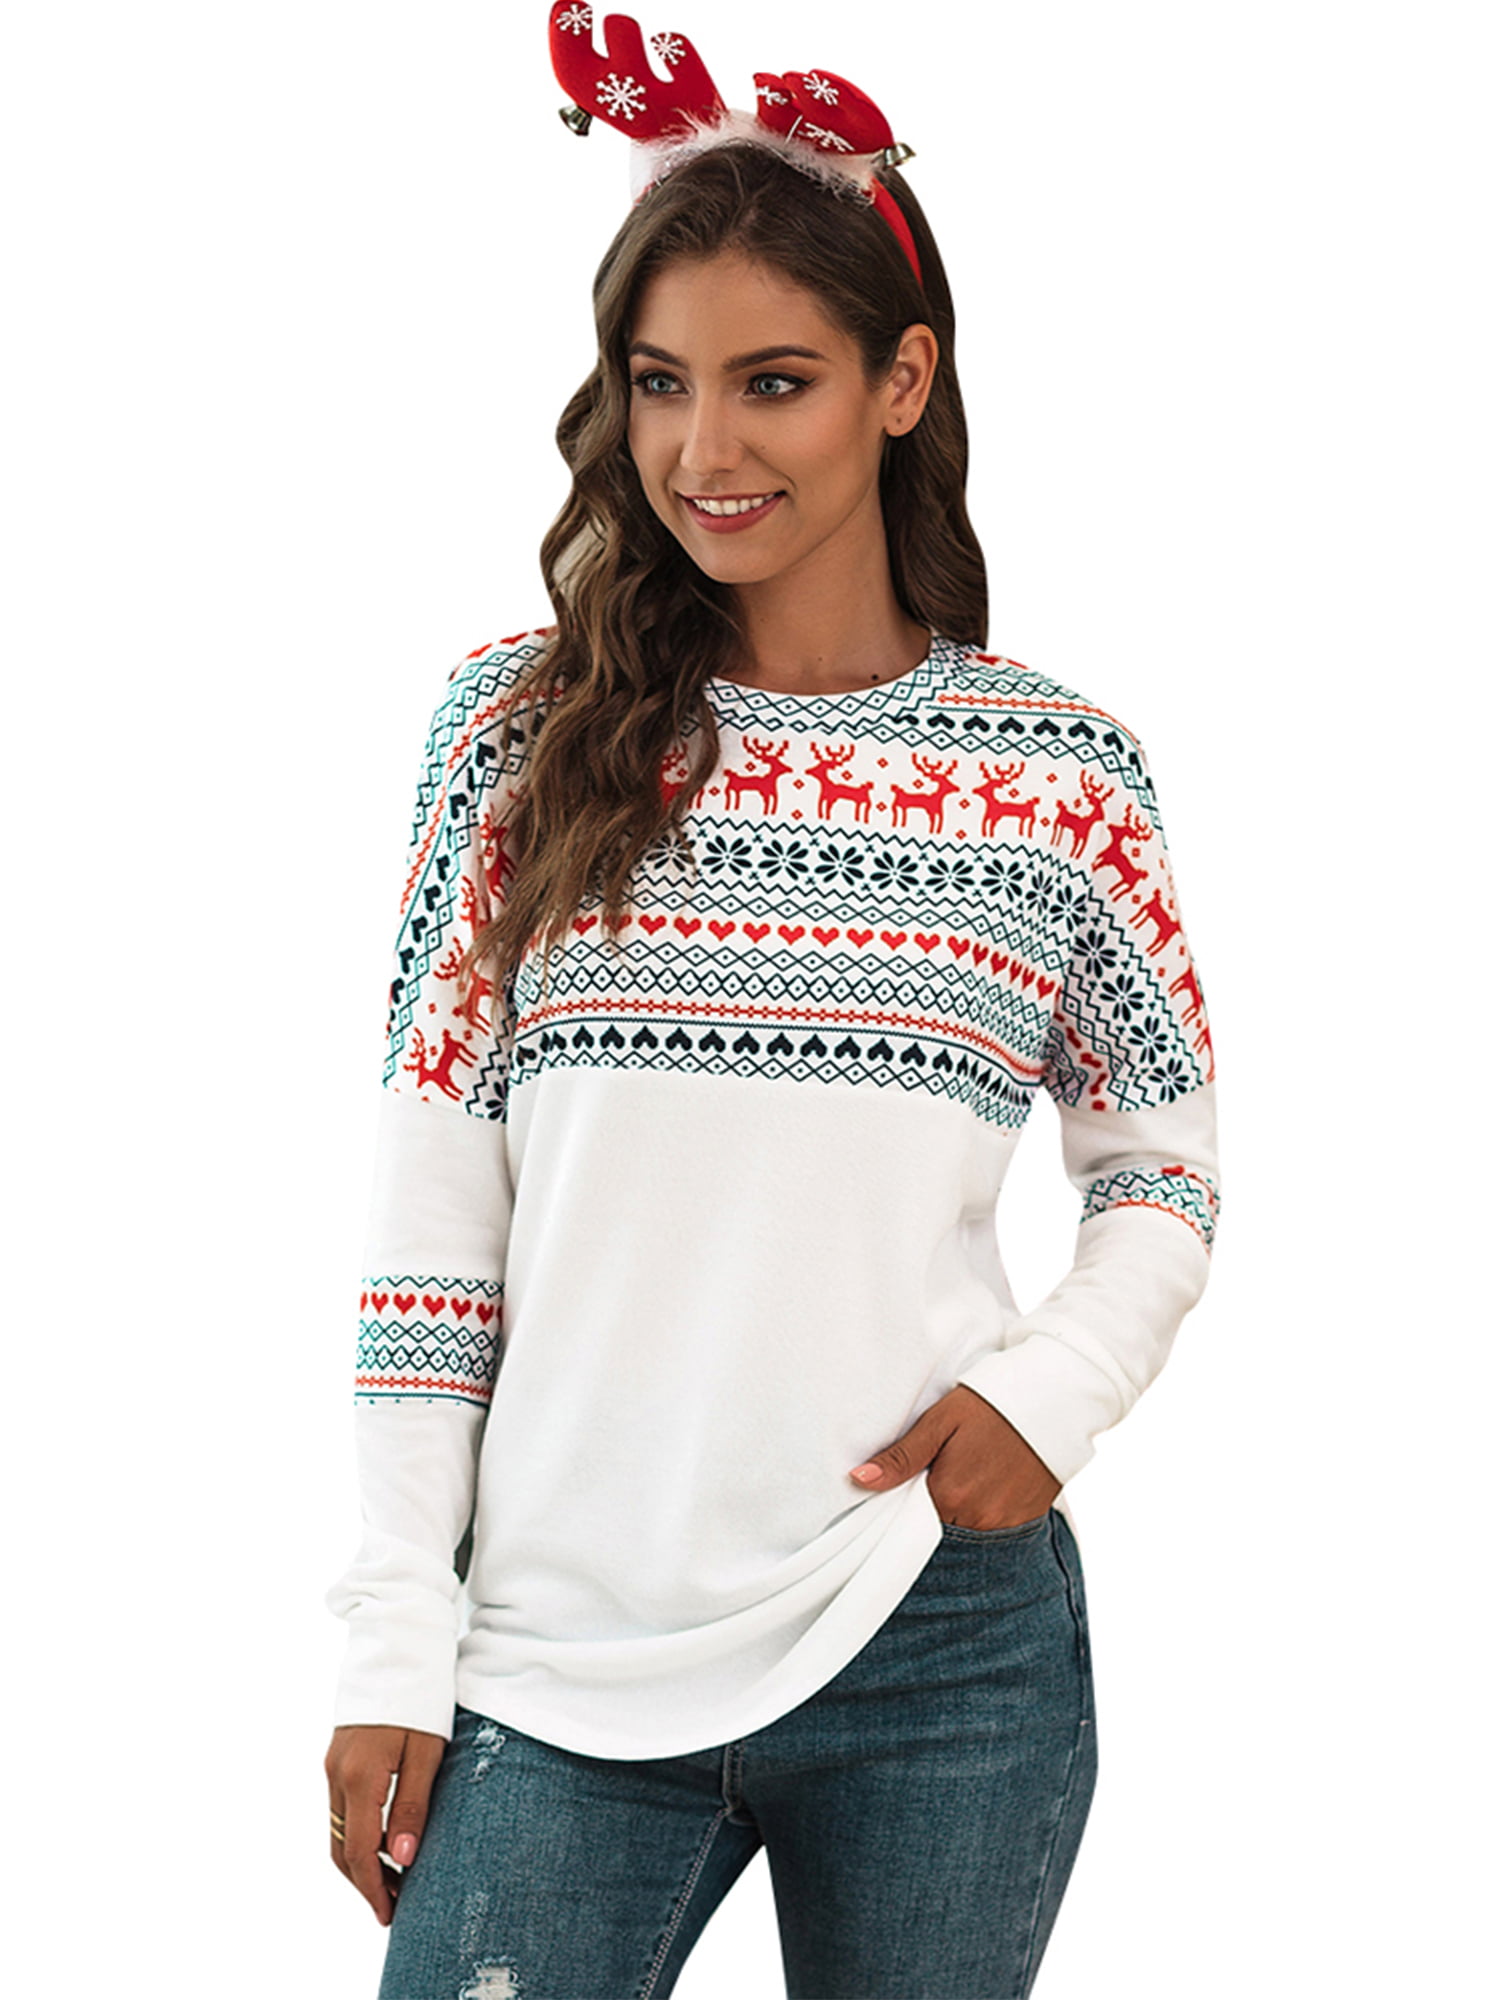 Ladies Christmas Jumper,Funny Graphic Reindeer Xmas Sweatshirt Crew Neck Long Sleeve Pullover Tops Blouse Christmas T Shirt for Women UK